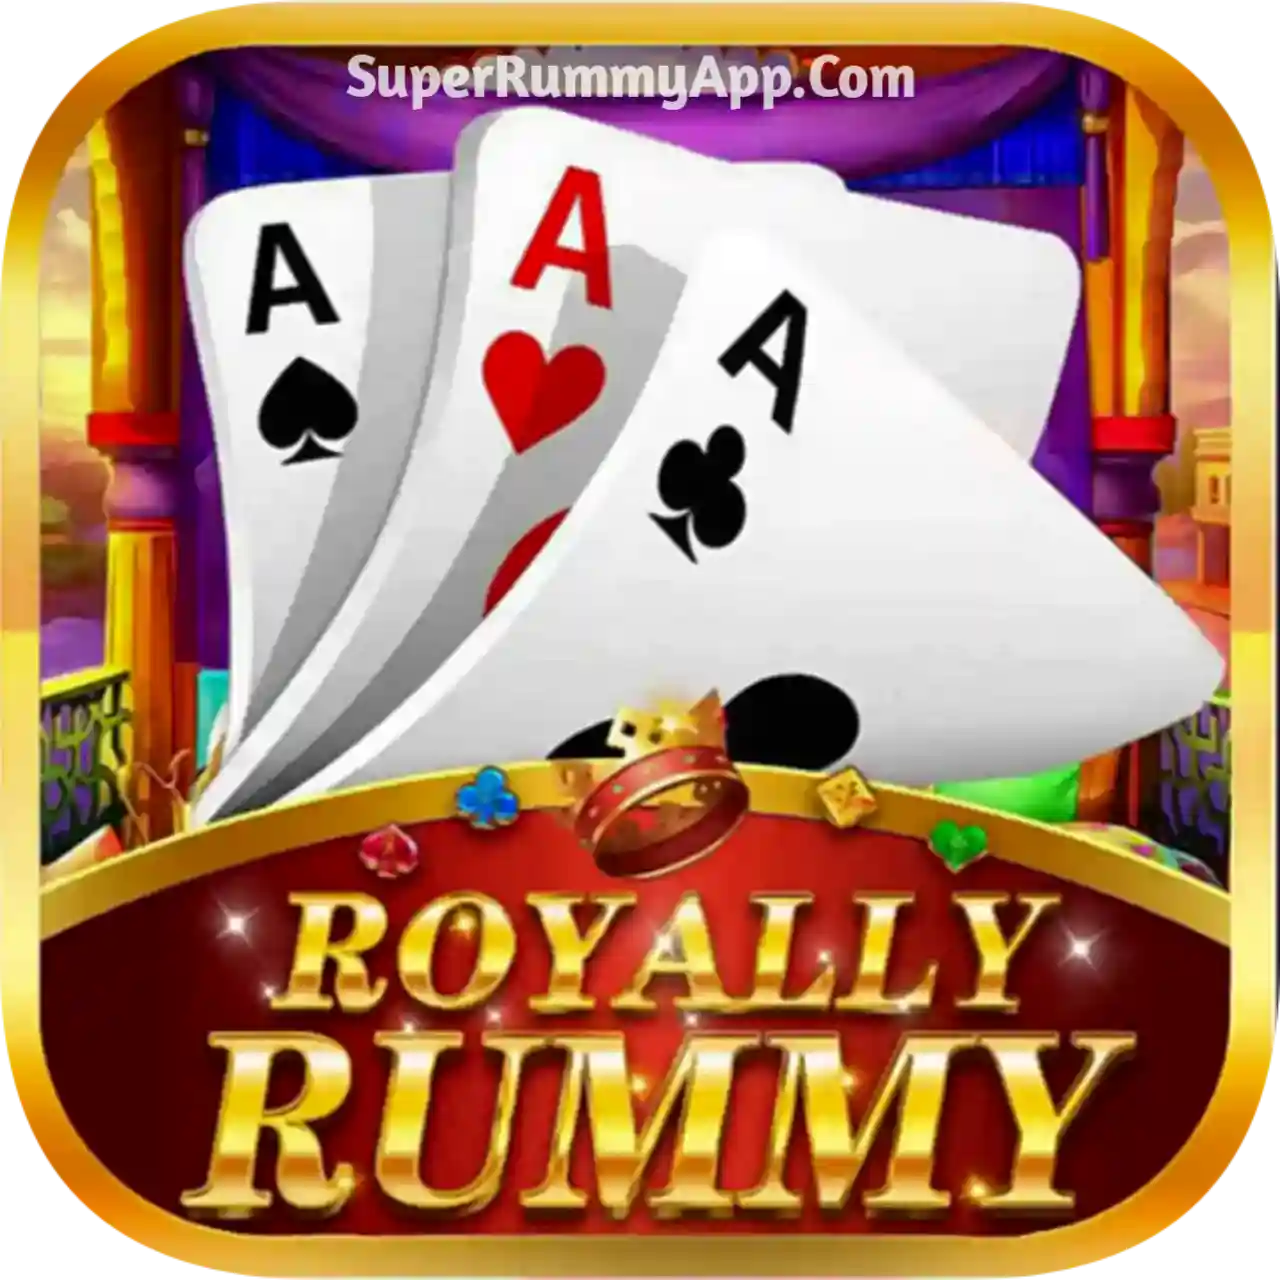 Royally Rummy - Rummy 51 Bonus App List - India Rummy App